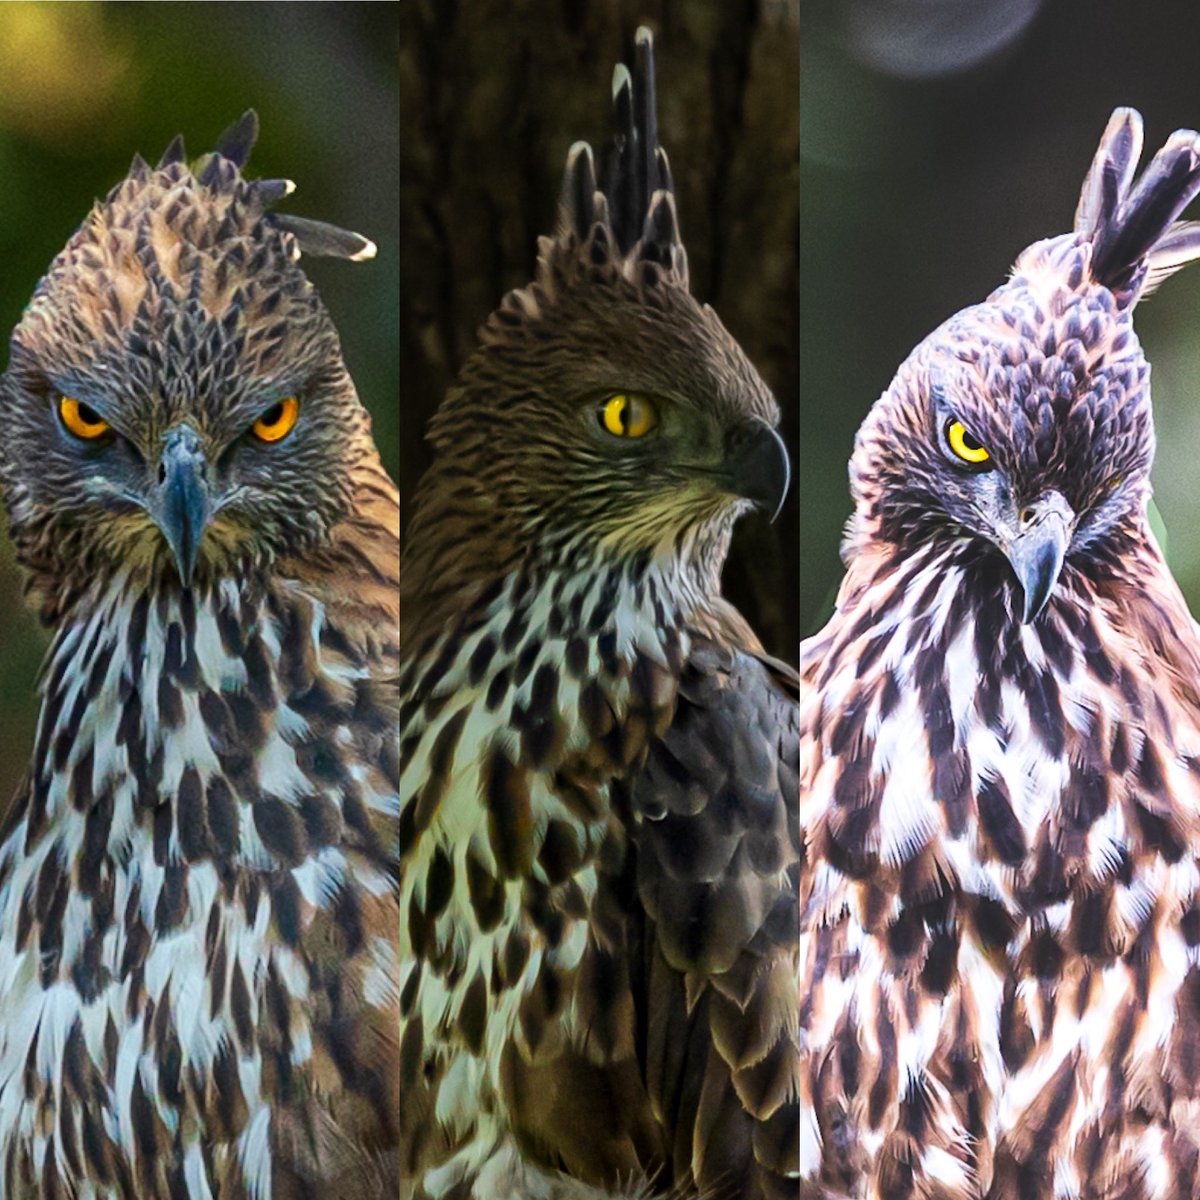 AngryBirds!!! Crested hawk eagle/Changeable hawk eagle #speed @Britnatureguide @OrnithophileI @Saket_Badola @vivek4wild @Avibase @Team4Nature #ThePhotoHour #BirdsSeenIn2021 #hope4all @ParveenKaswan @WorldofWilds #birds #birdphotography #moods #mood #wildlifephotography #Luv4Wilds